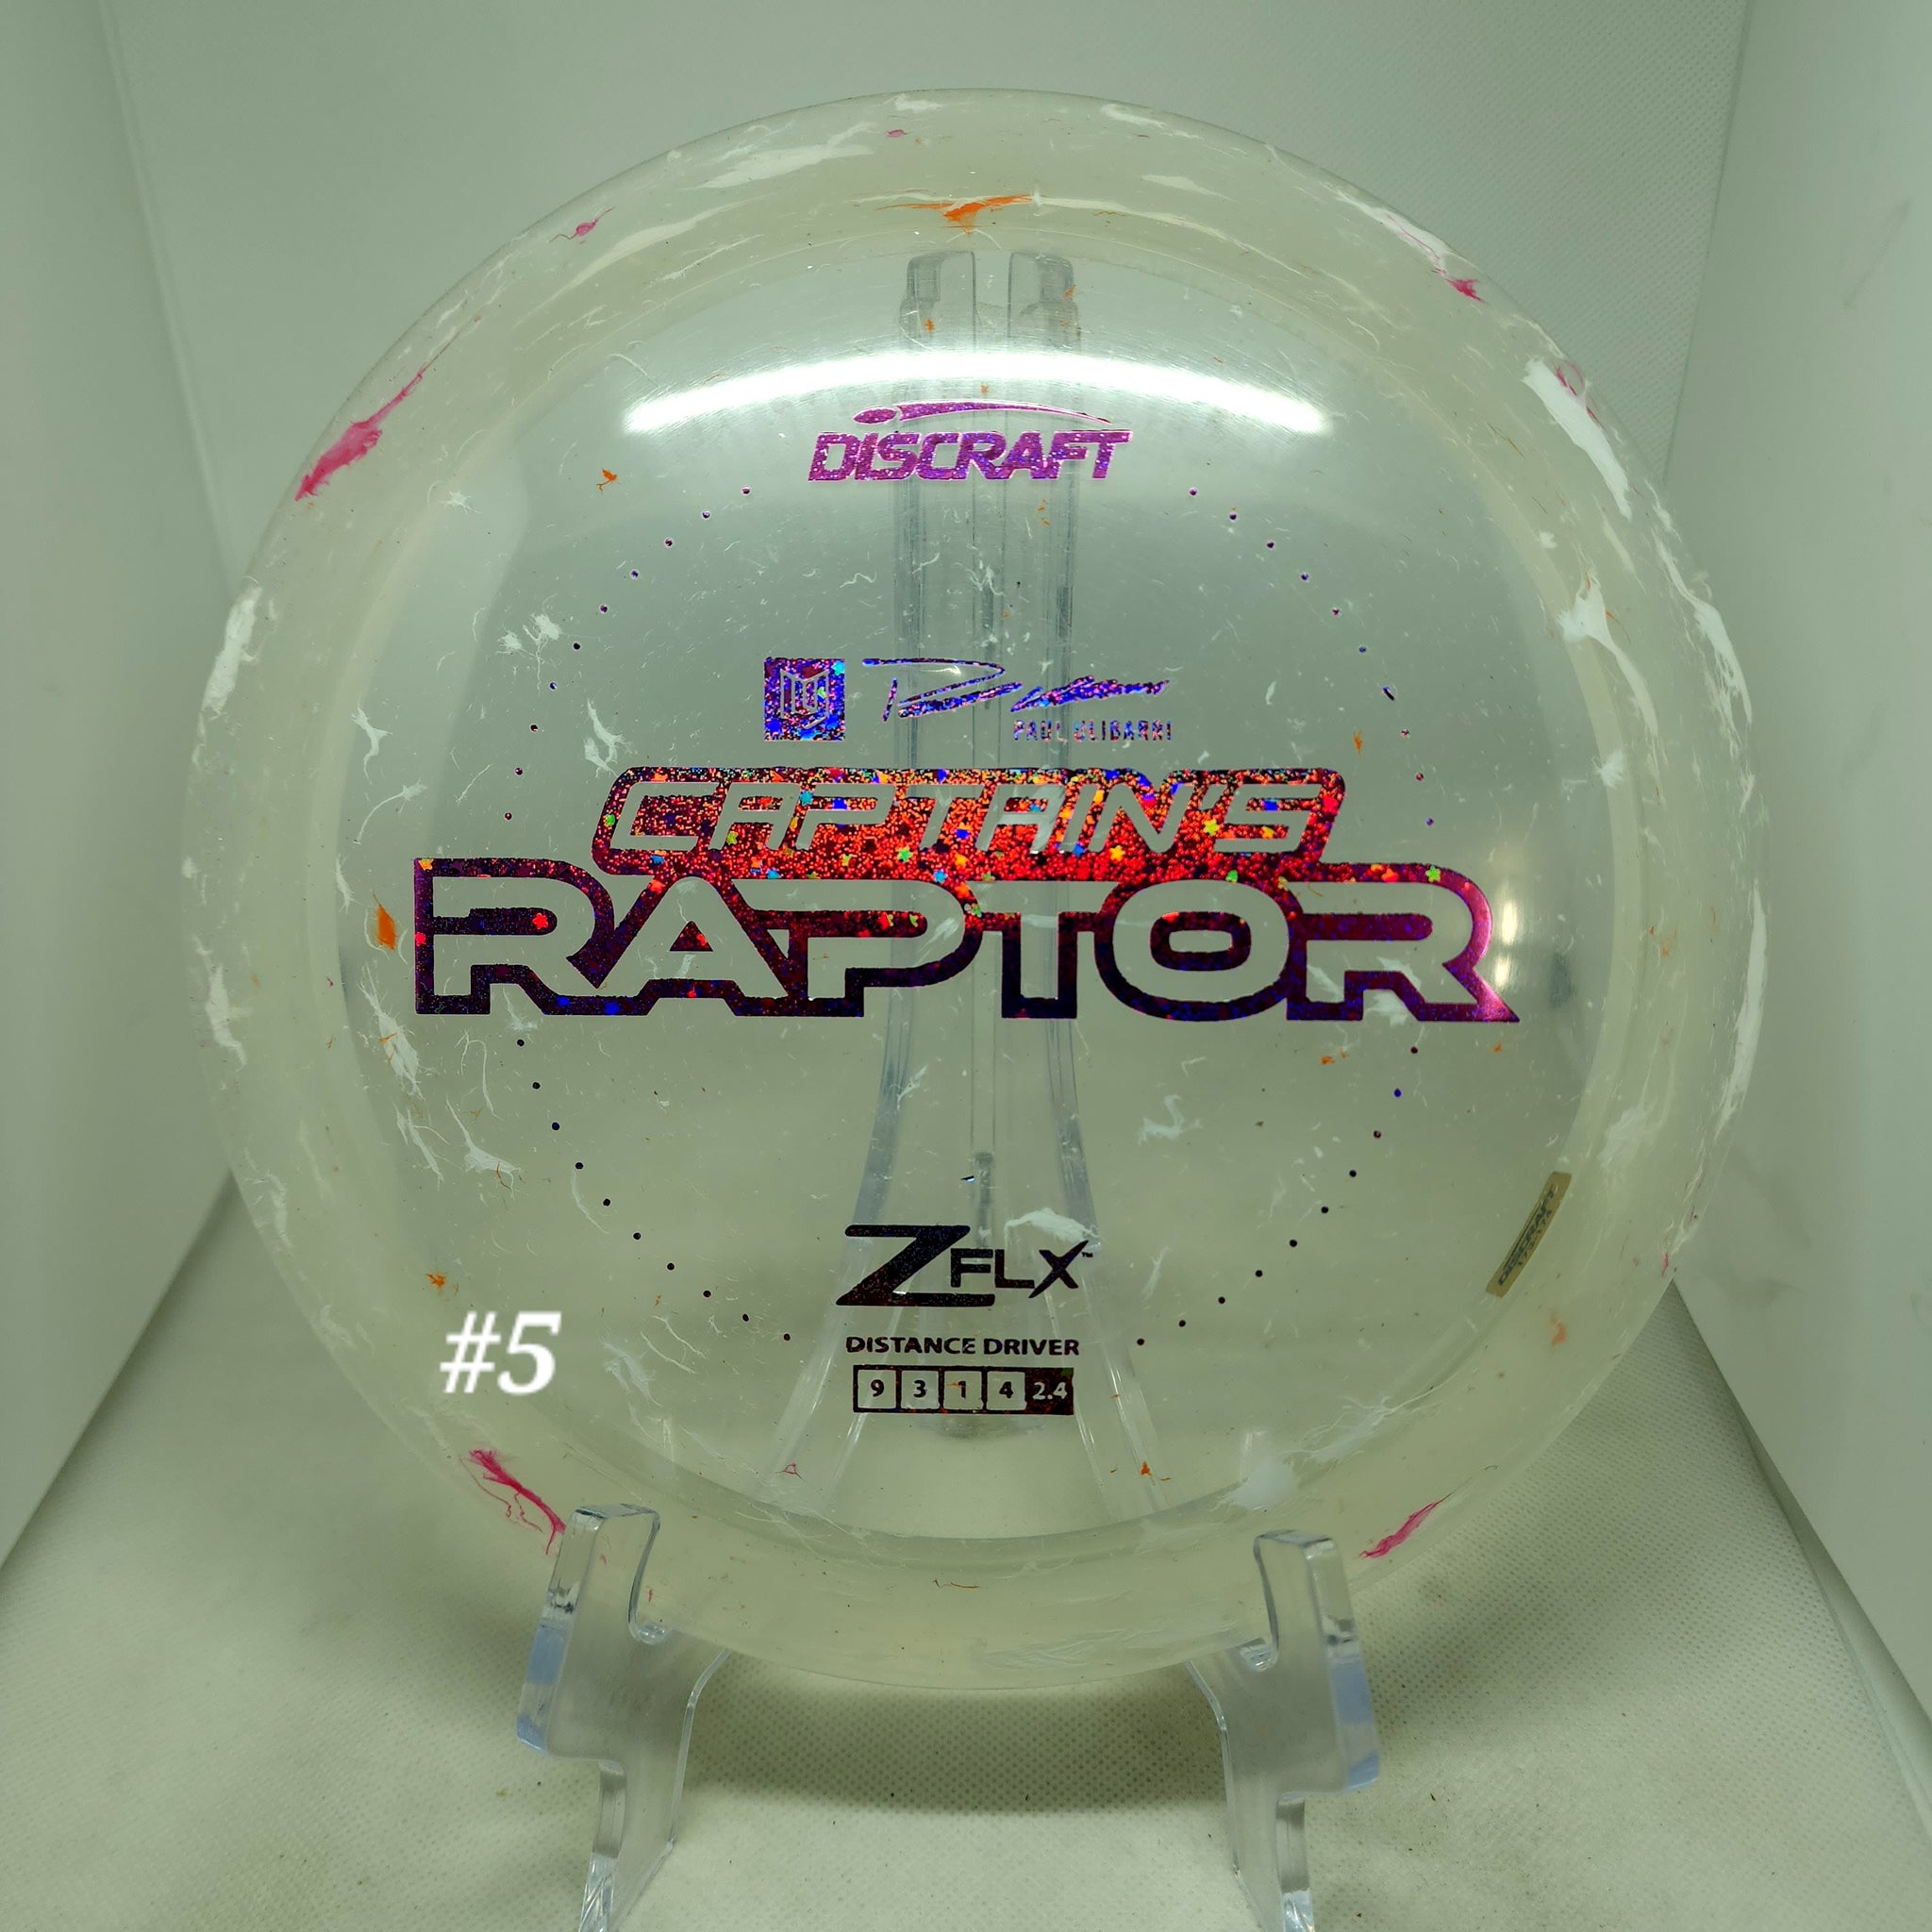 Captains Raptor (Z FLX Jawbreaker Plastic)